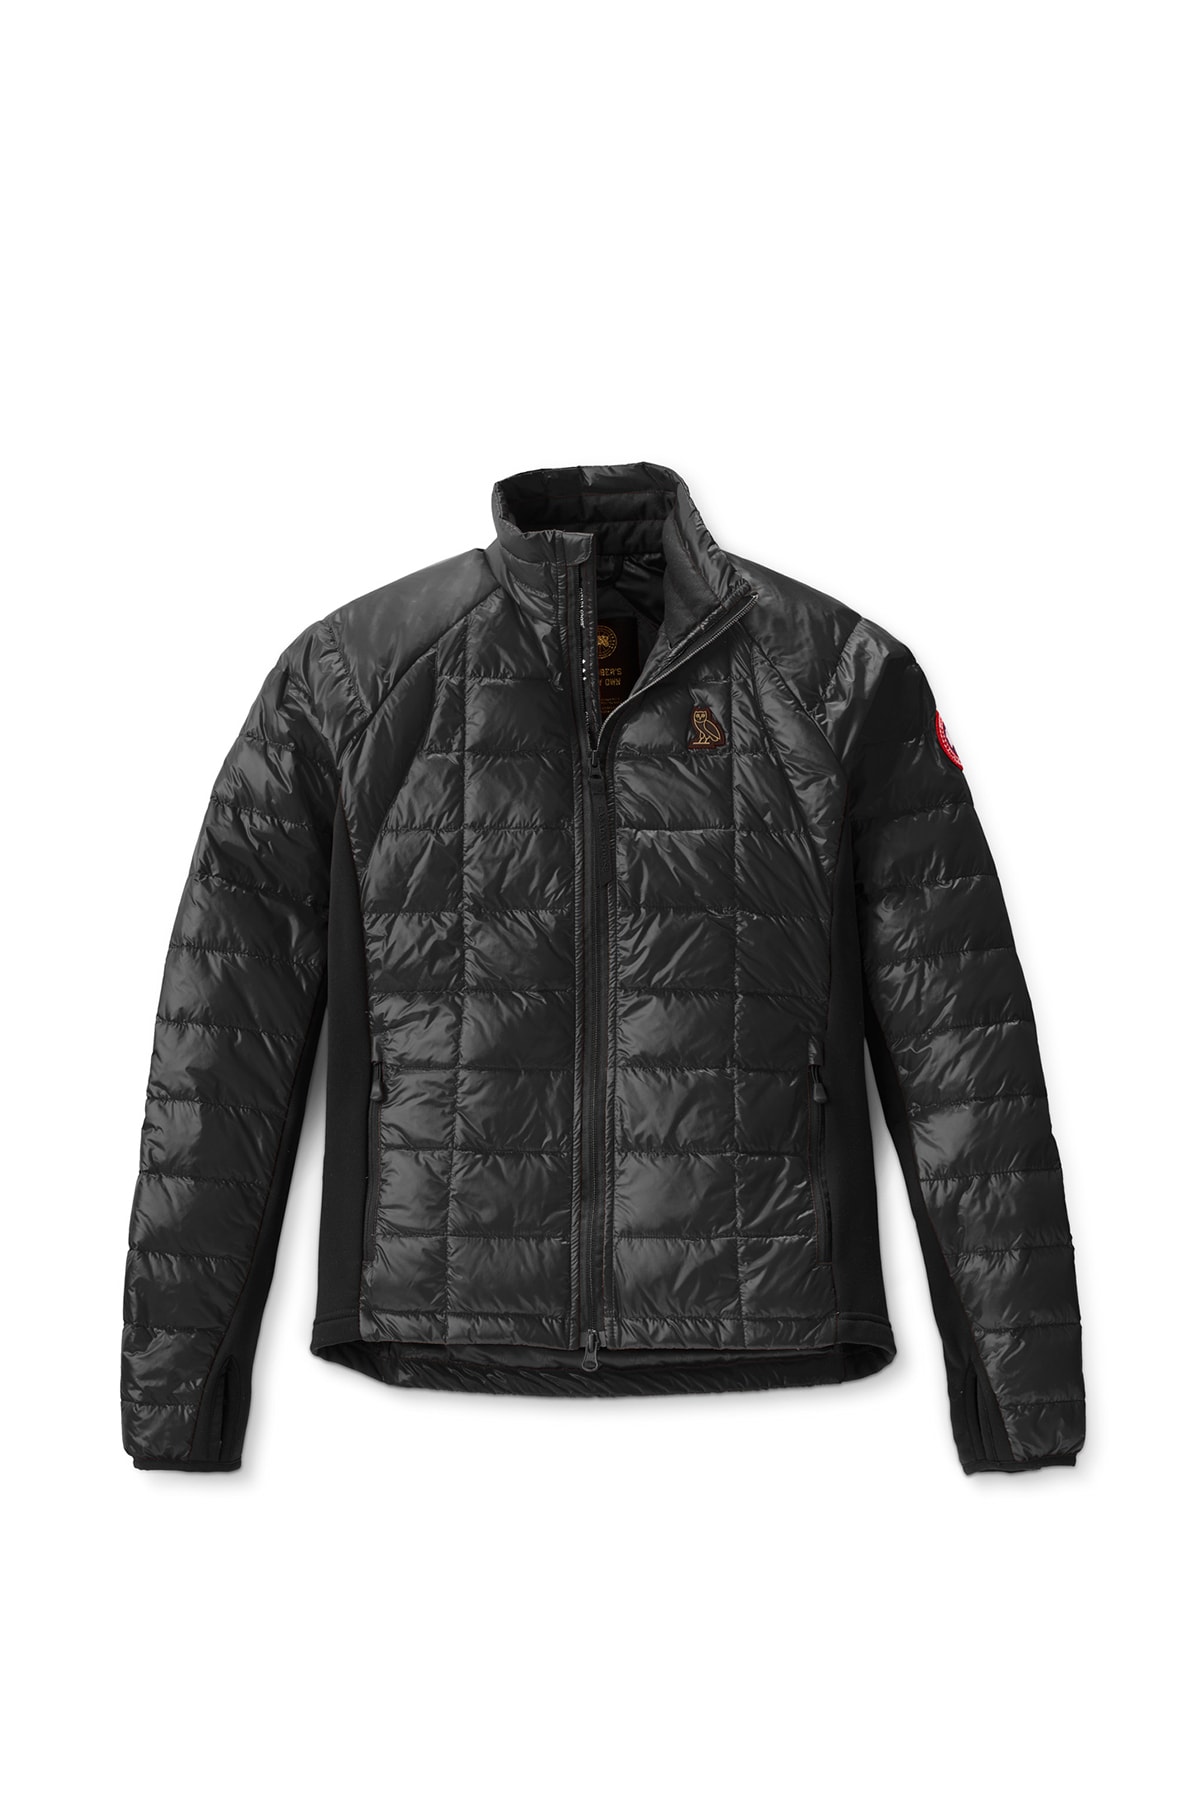 OVO x Canada Goose Hybridge Lite jacket 聯名系列官方圖片釋出